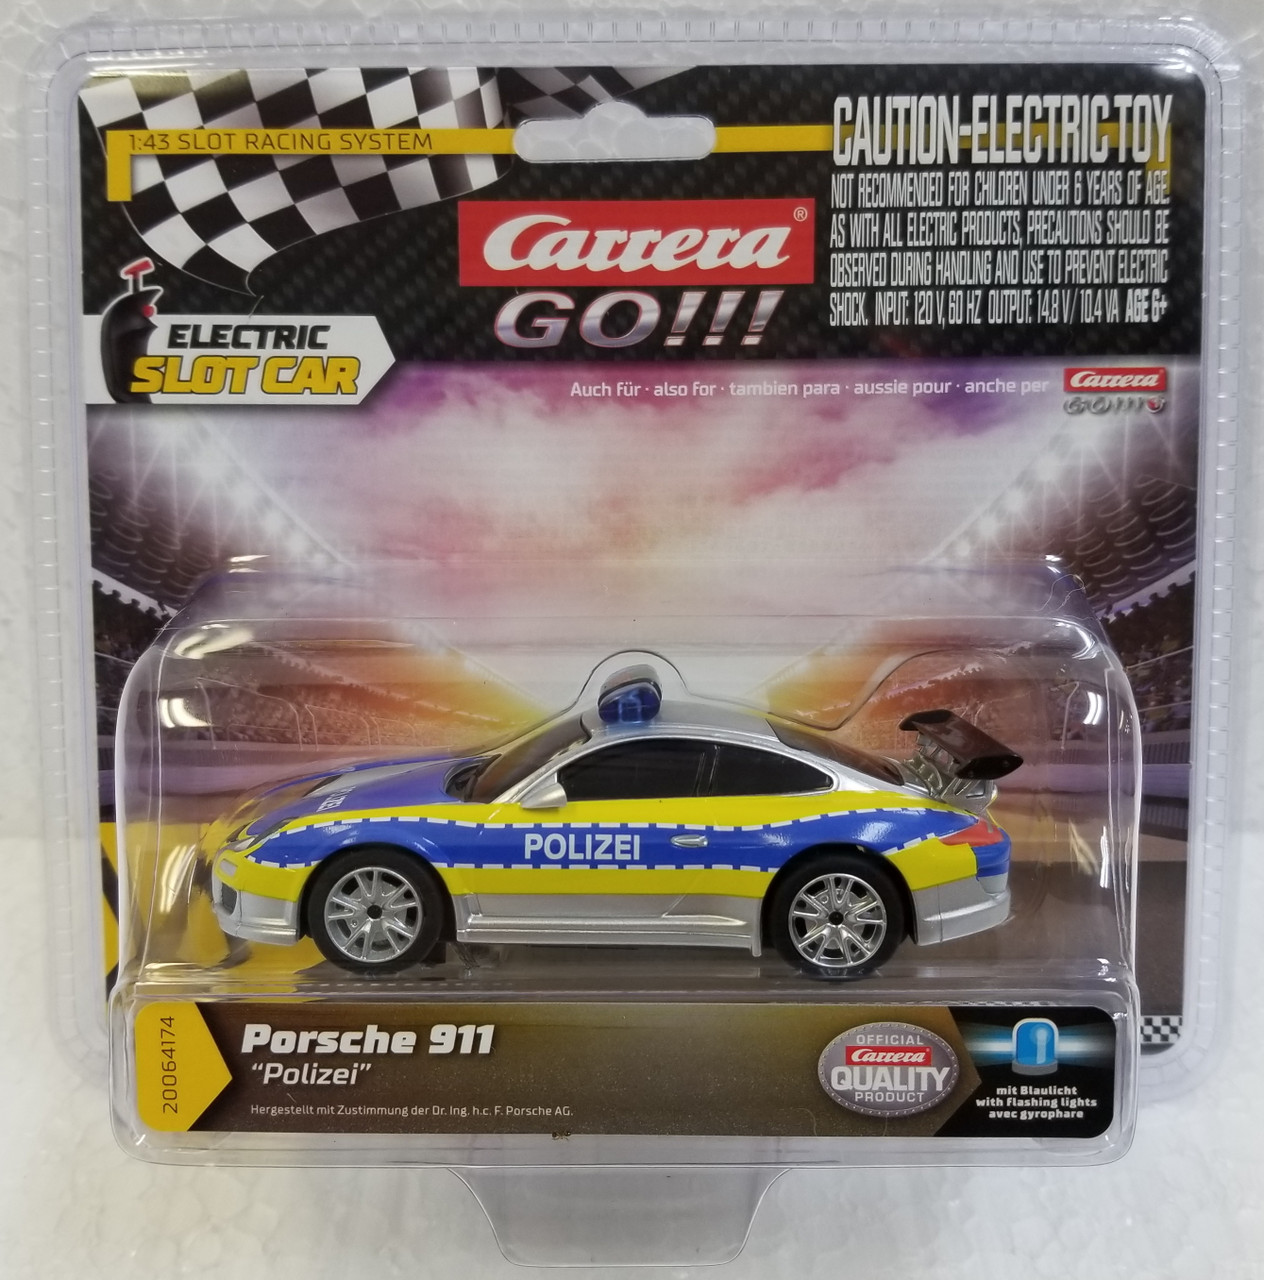 64174 Carrera GO!!! Porsche 911 Polizei Police 1:43 Slot Car